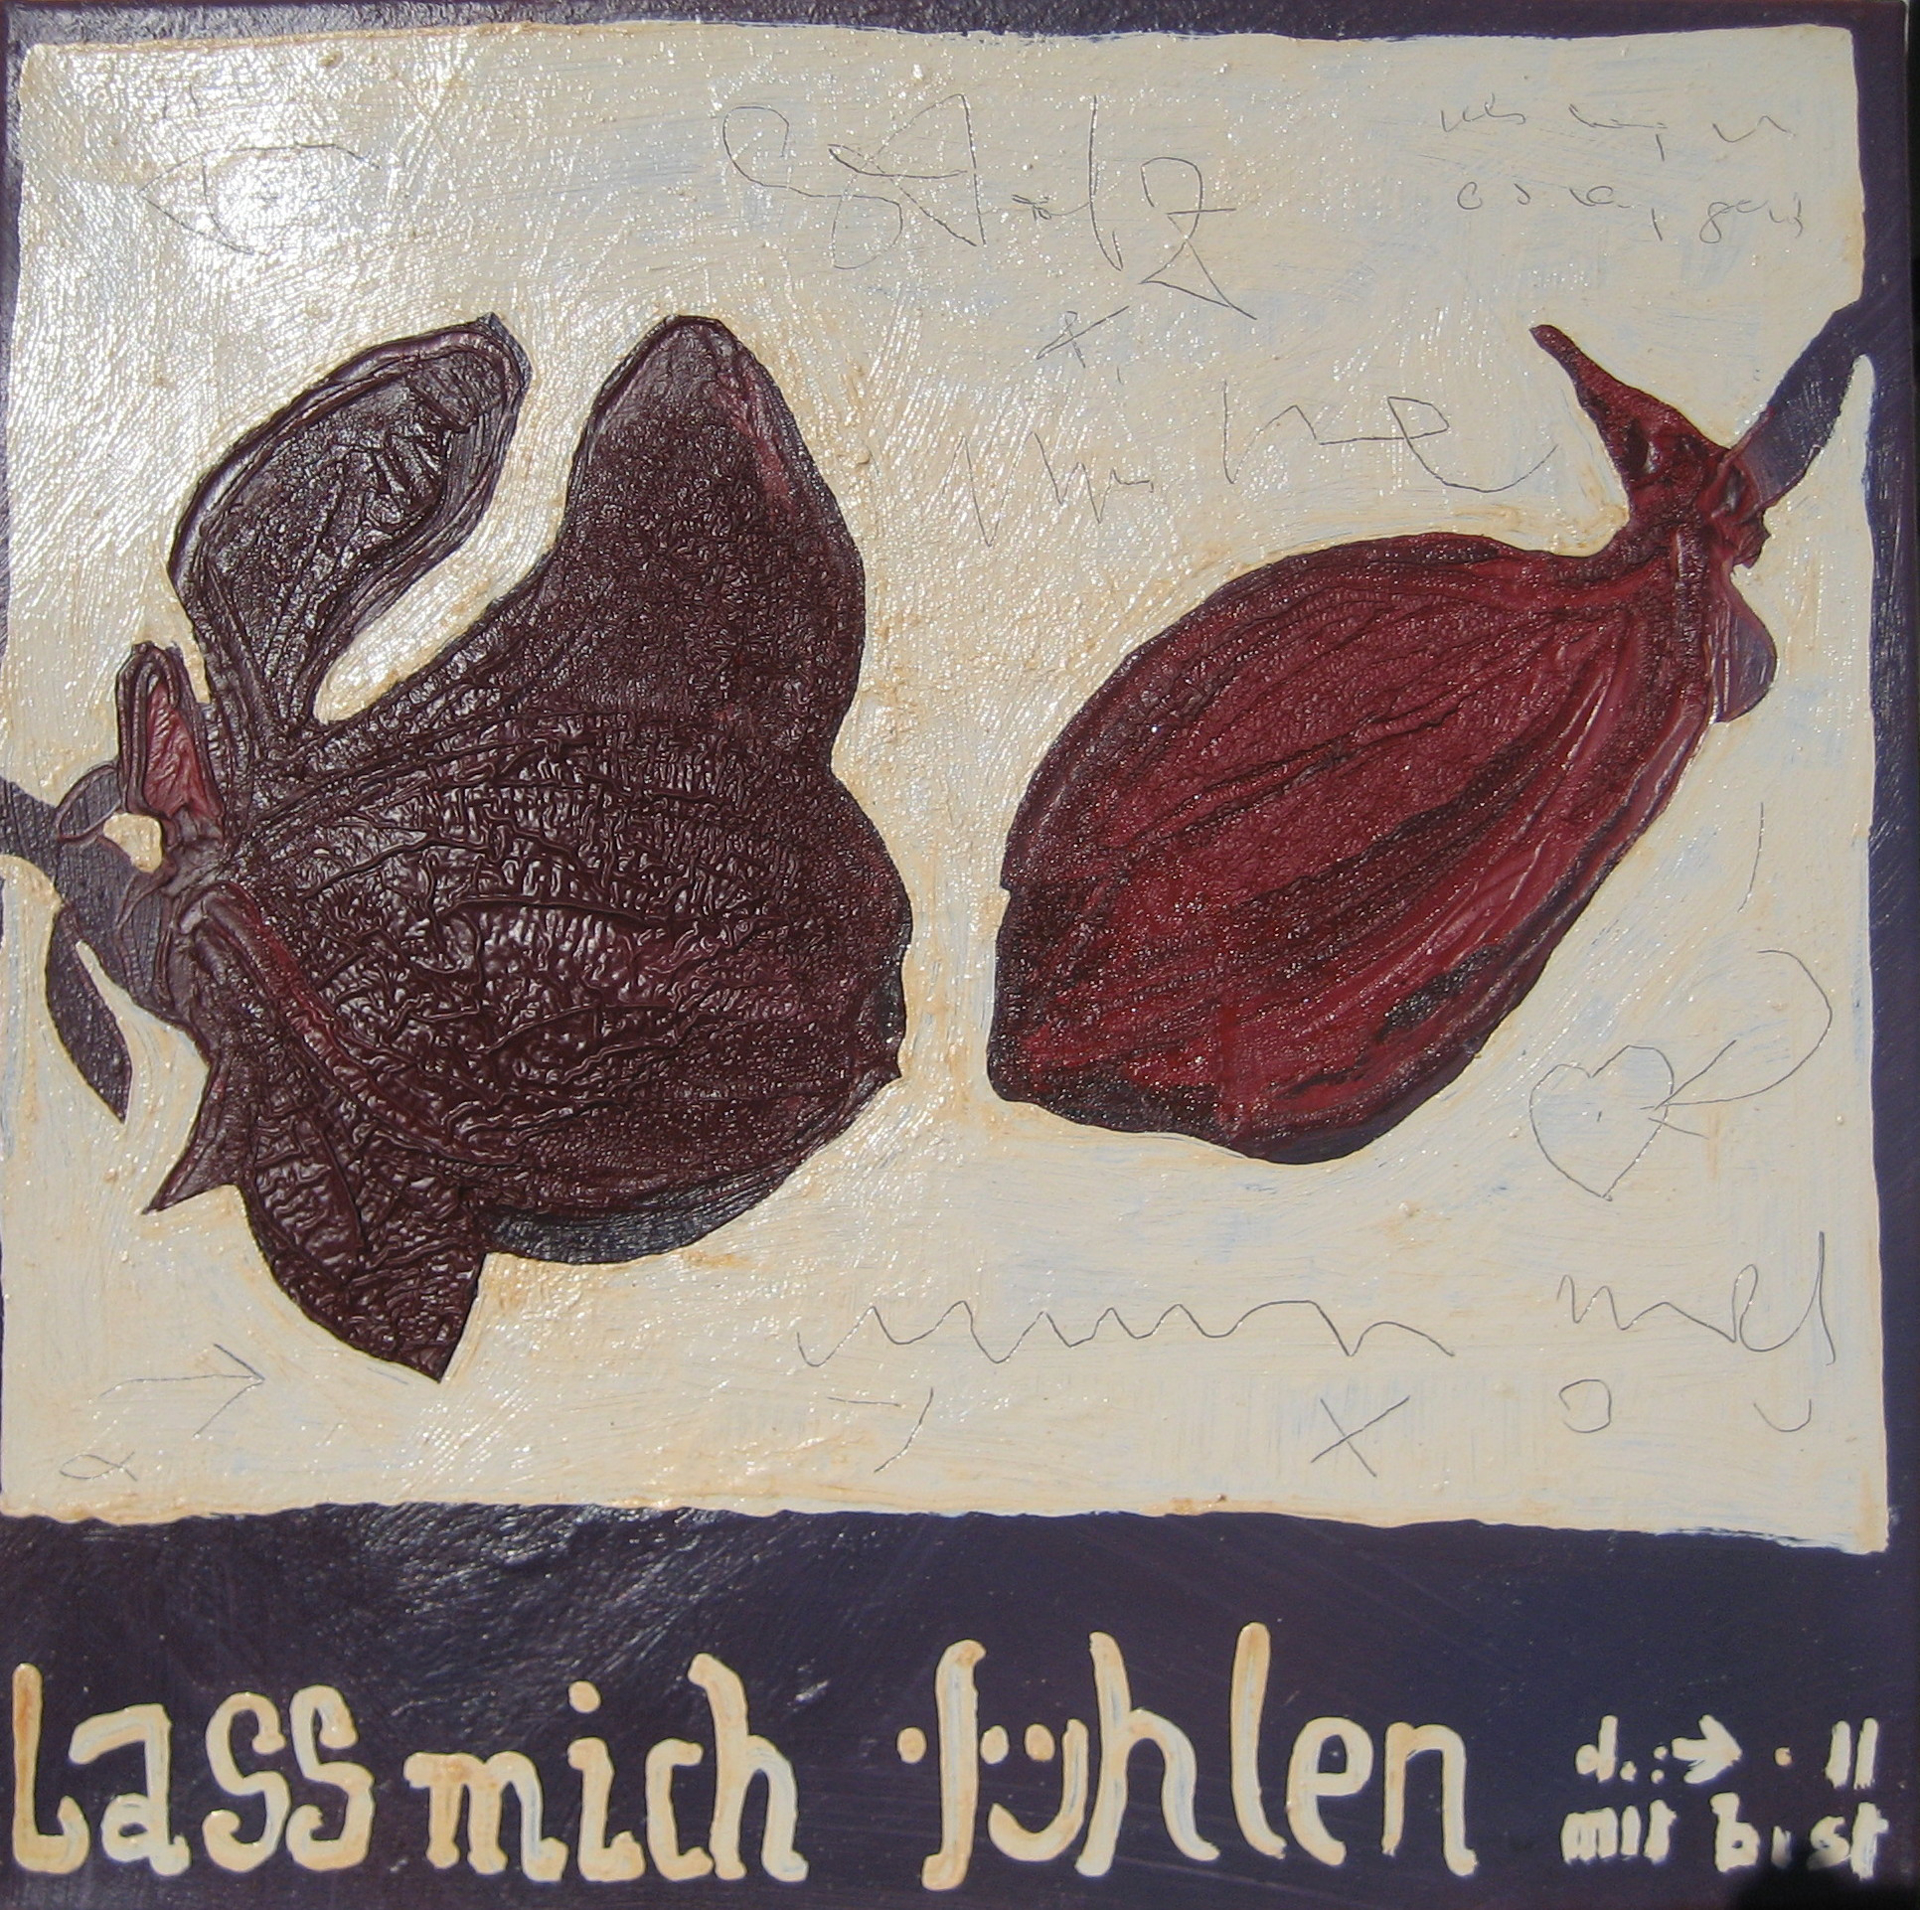 Lass Mich Fuehlen by Hans Joerg Fuerpass